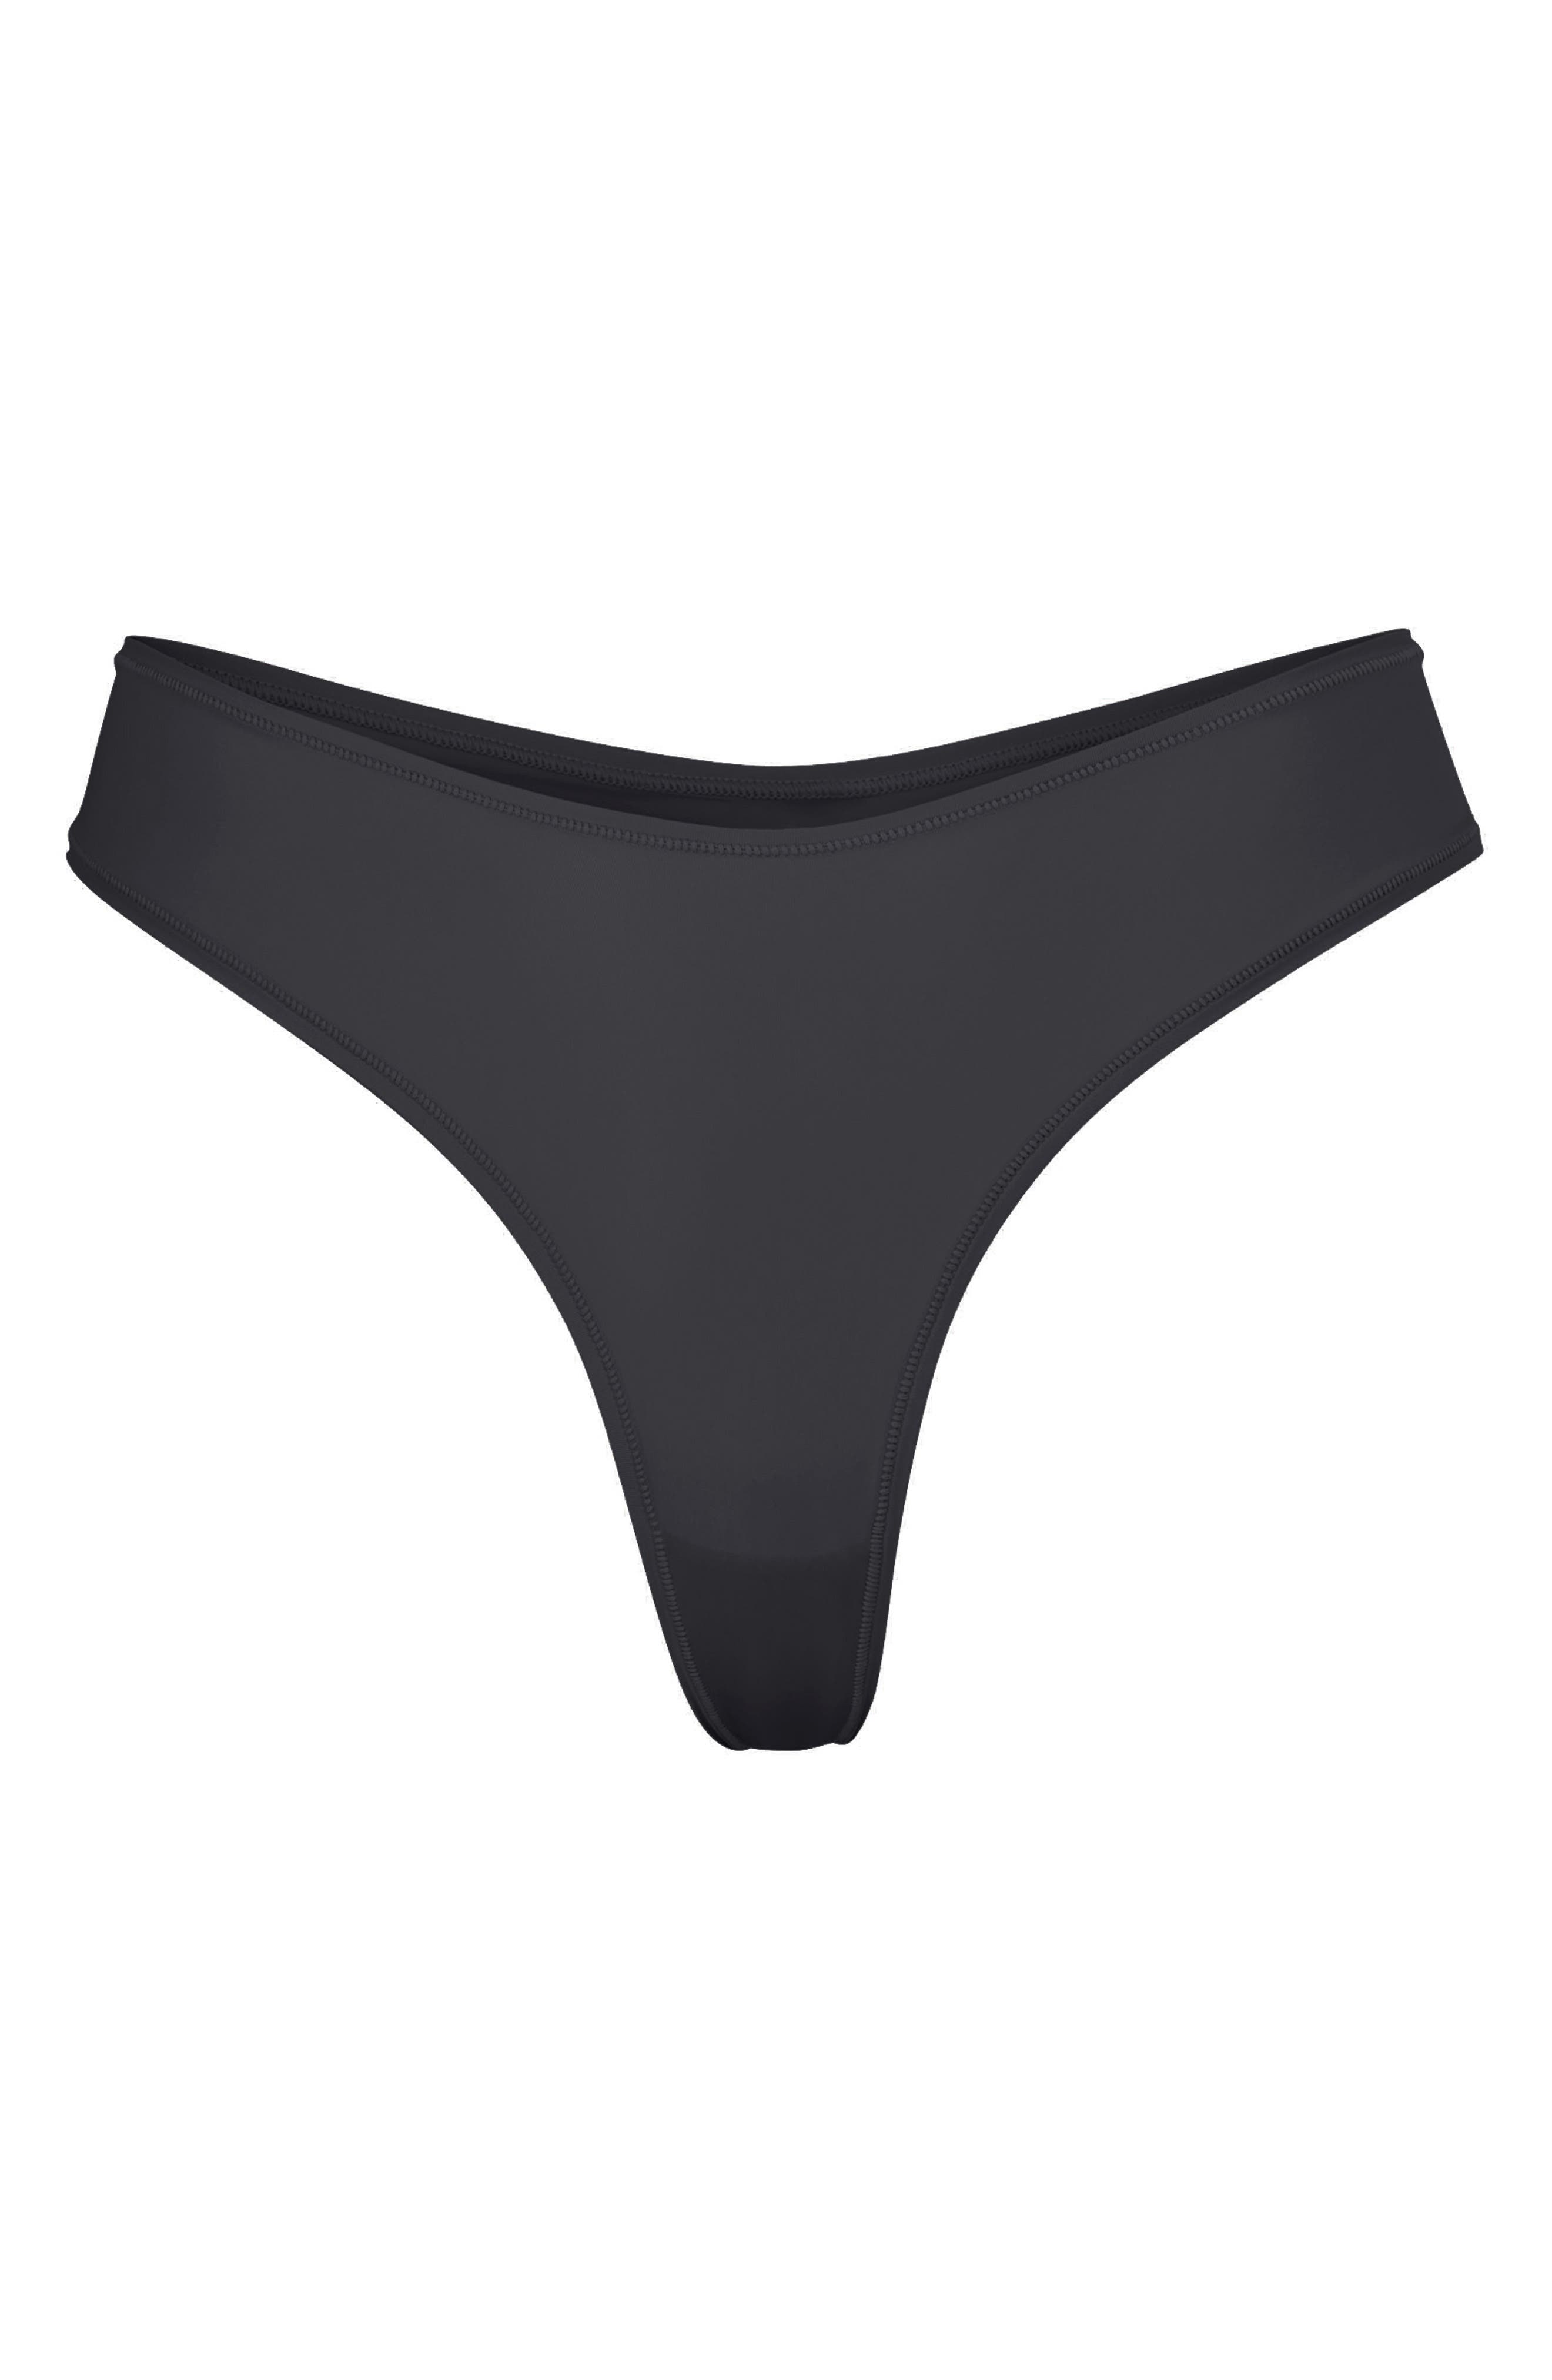 Marco Marco Men's Elastic Waist Core Thong Underwear Black Size XL NWT 